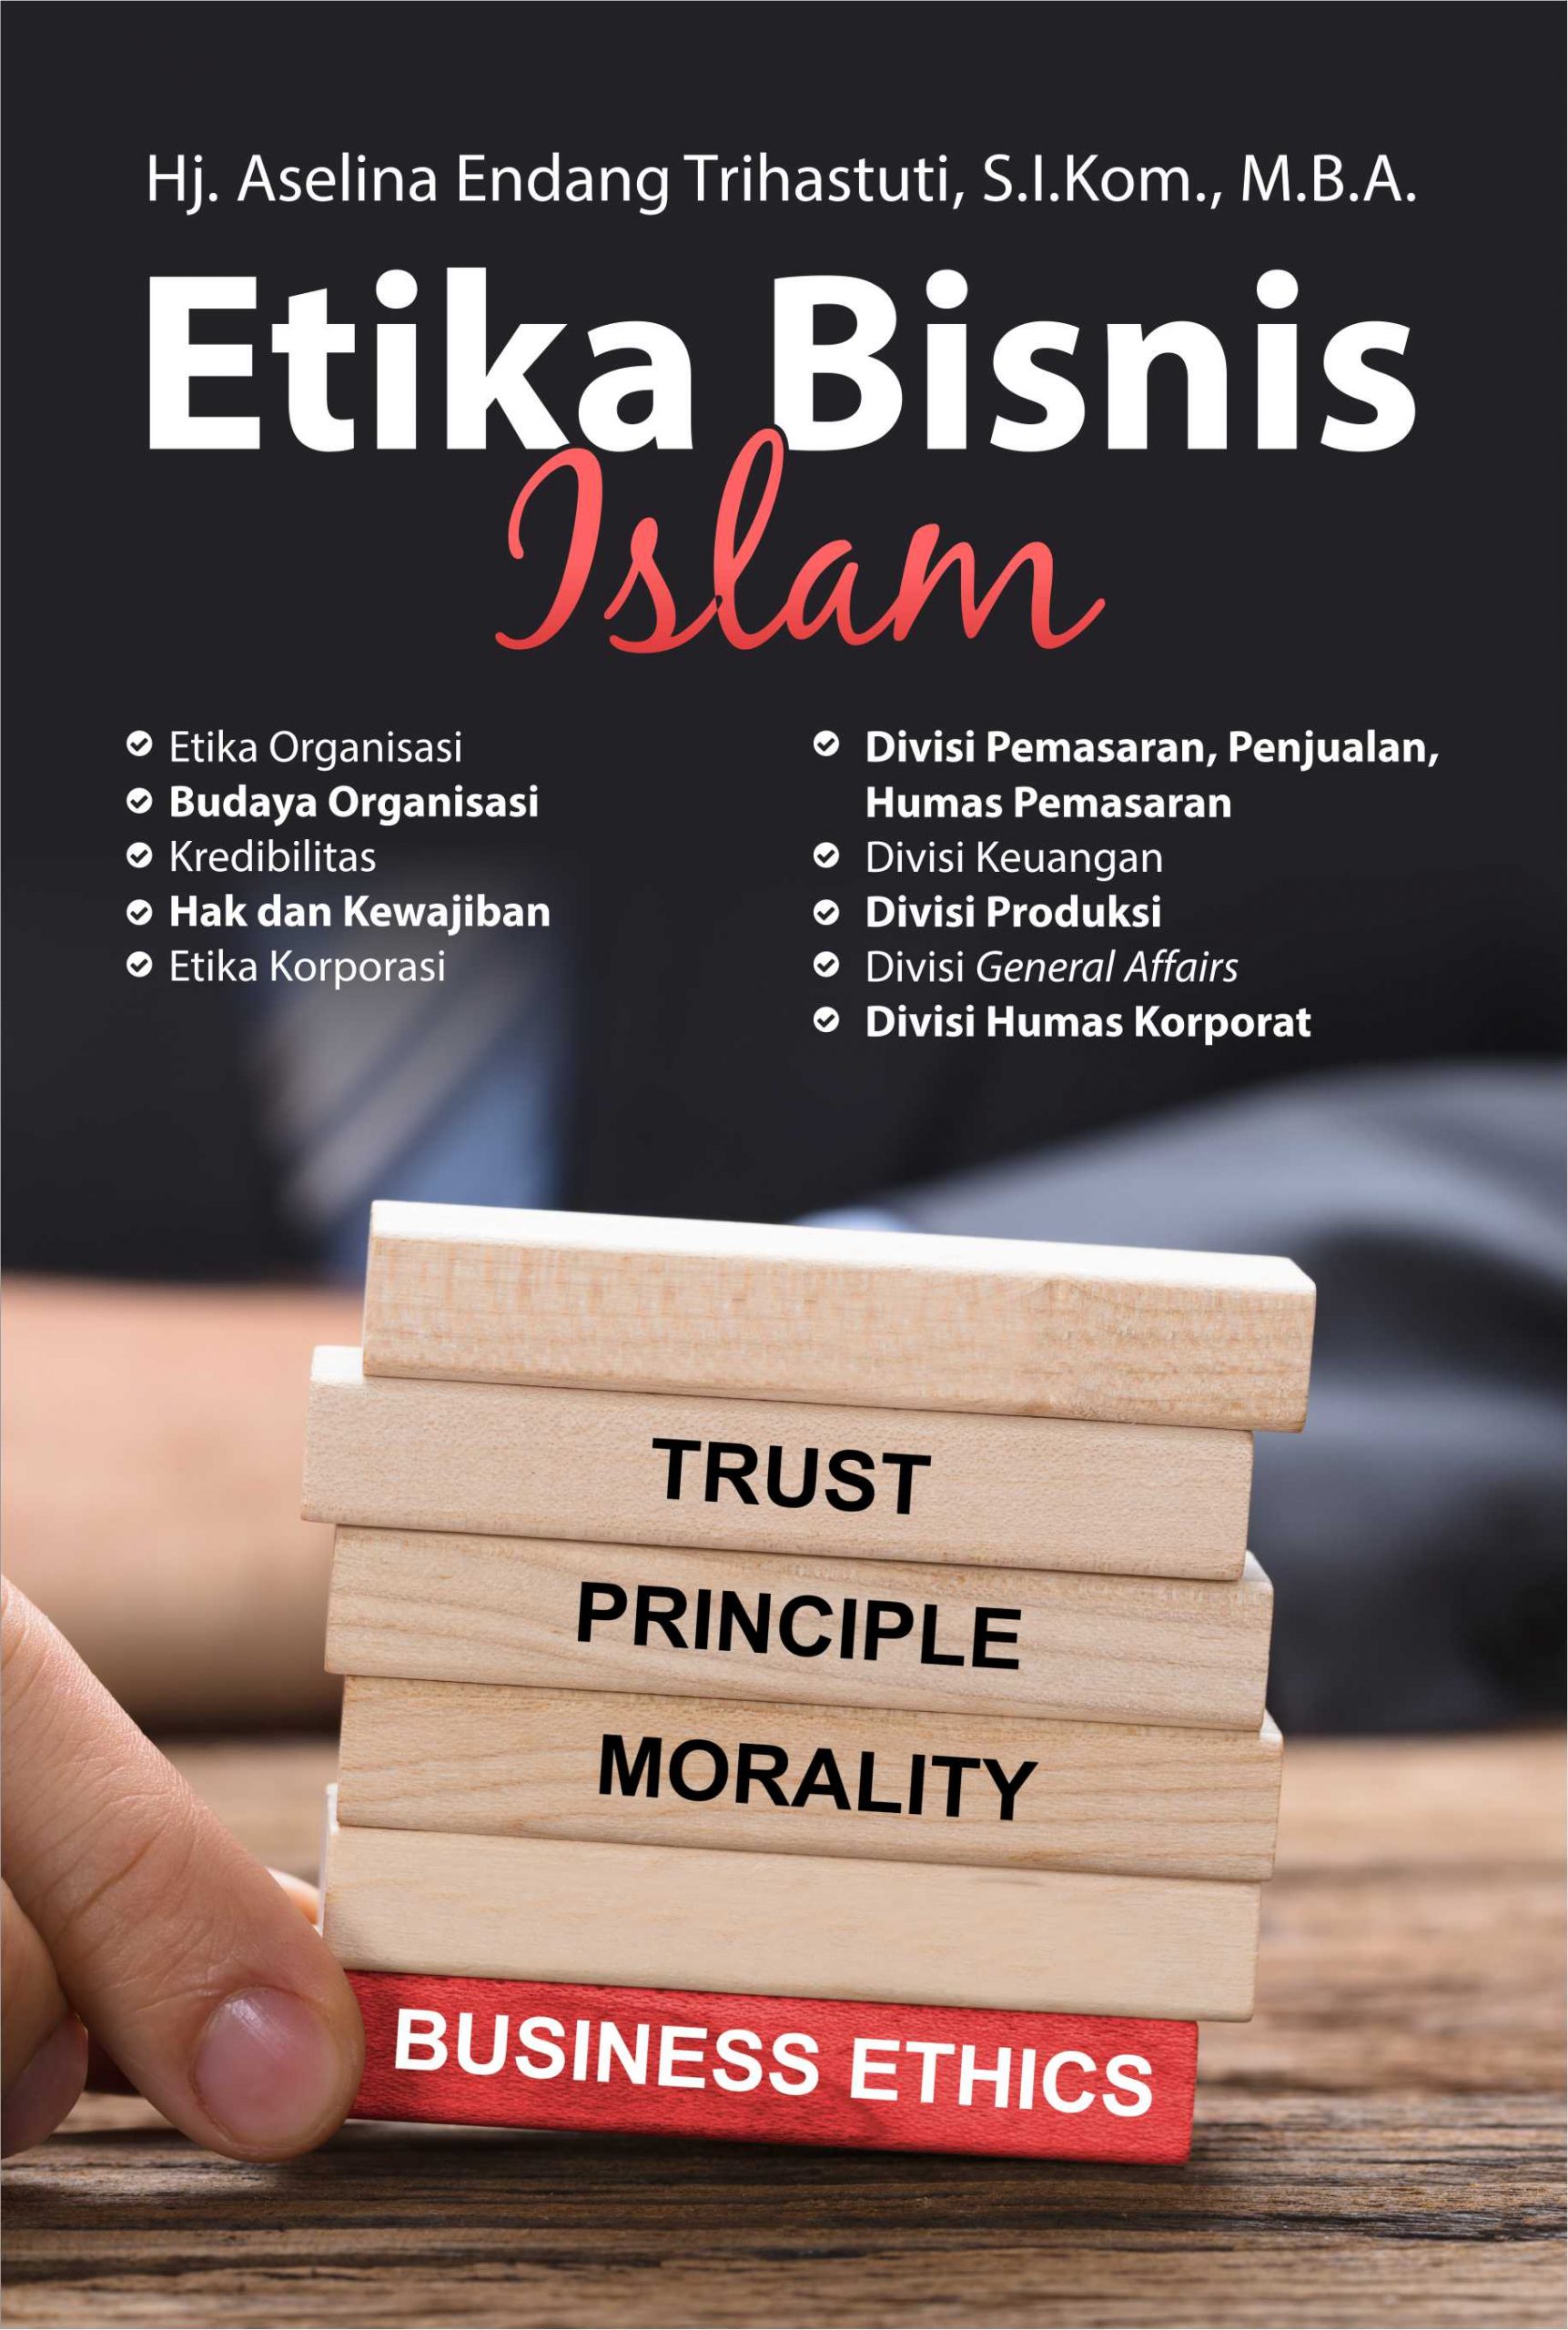 Gambar Etika Bisnis Islam - KibrisPDR